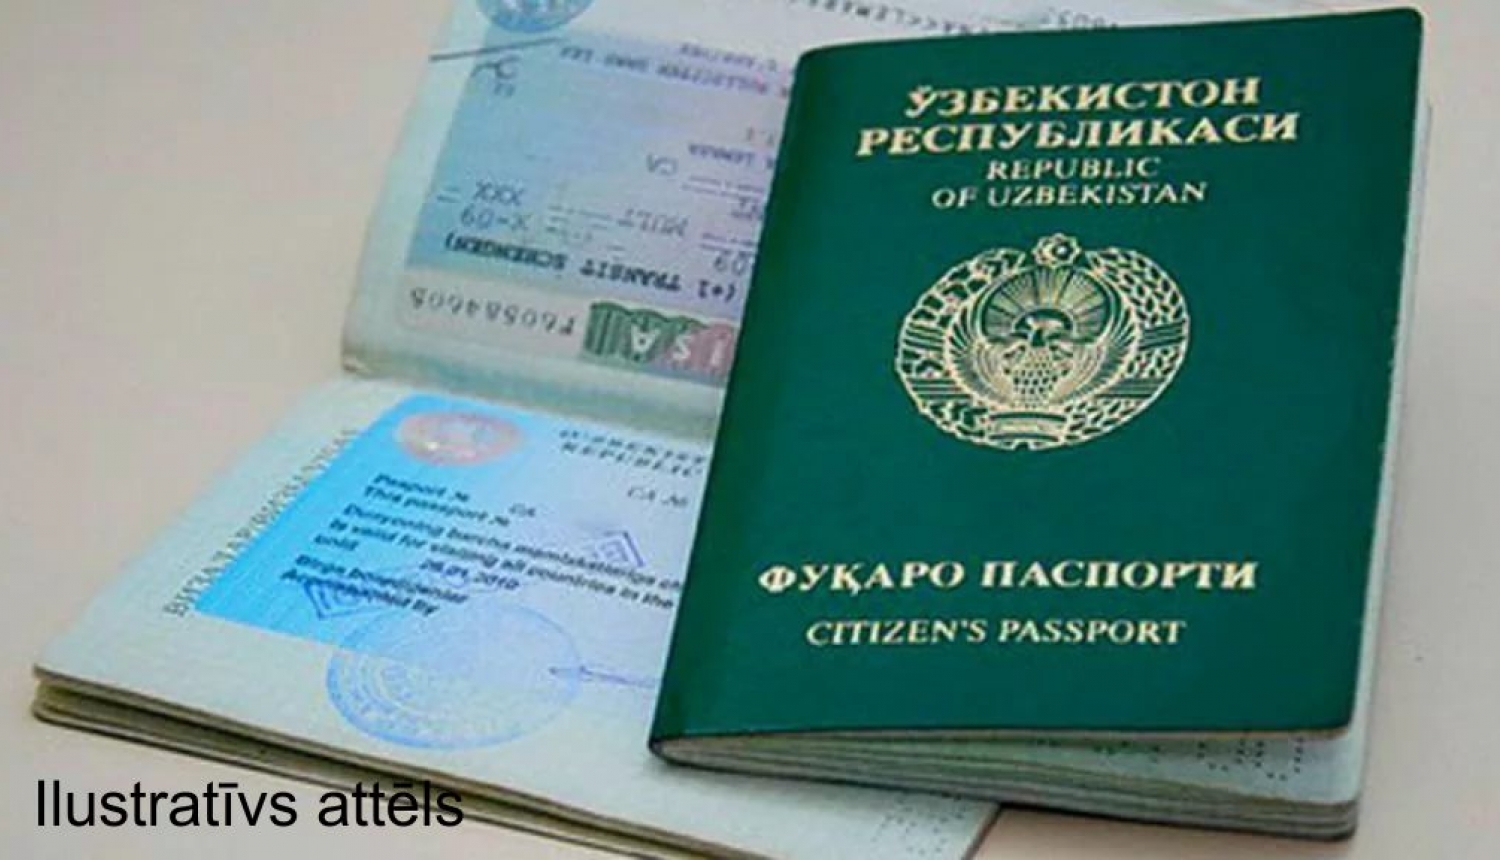 FOTO: Uzbekistānas pase